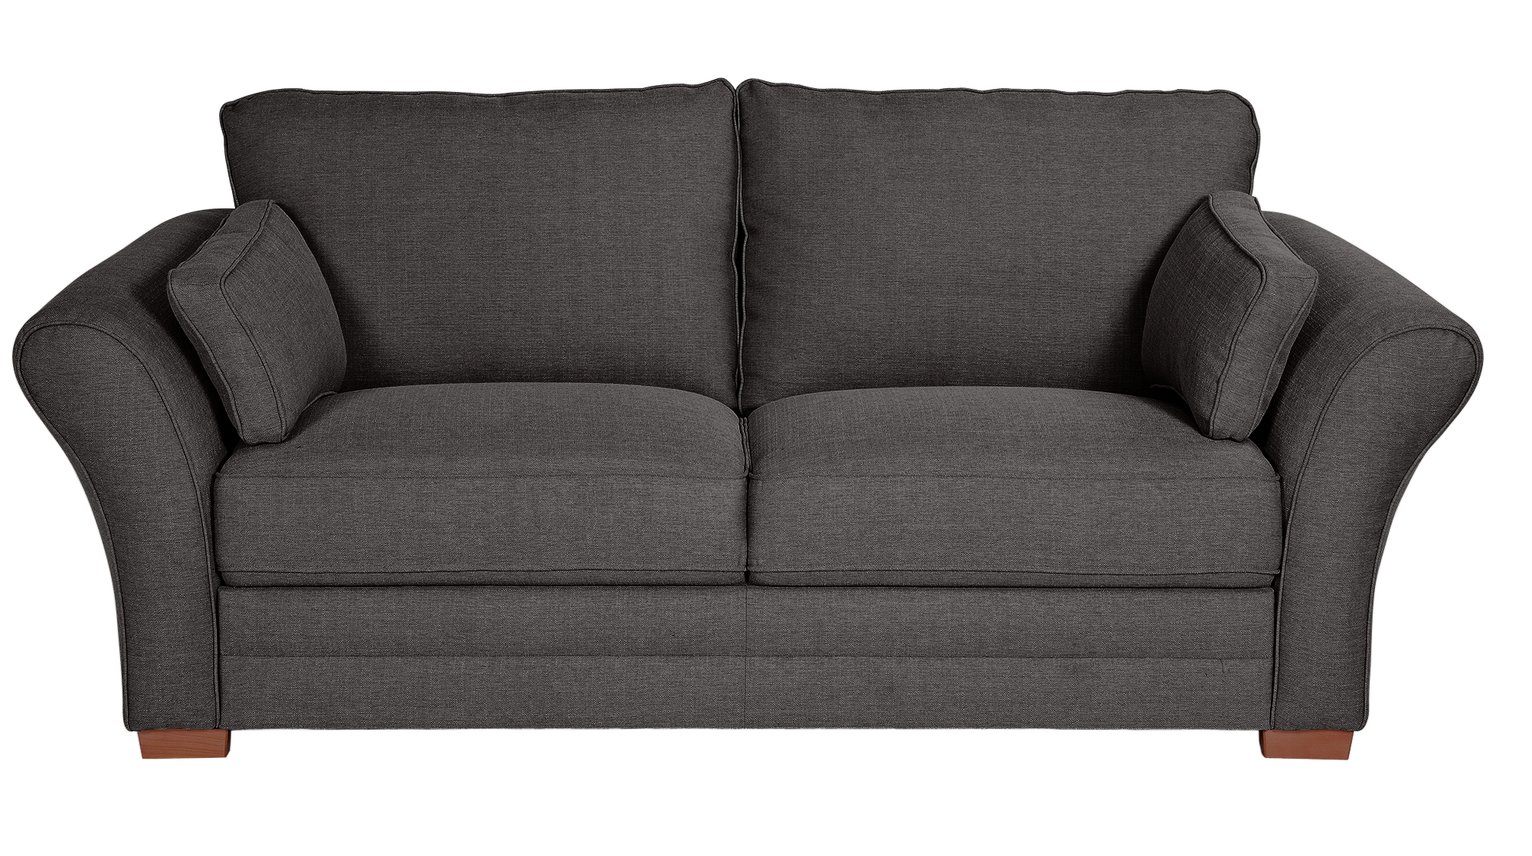 Argos Home Thornton 3 Seater Fabric Sofa - Charcoal